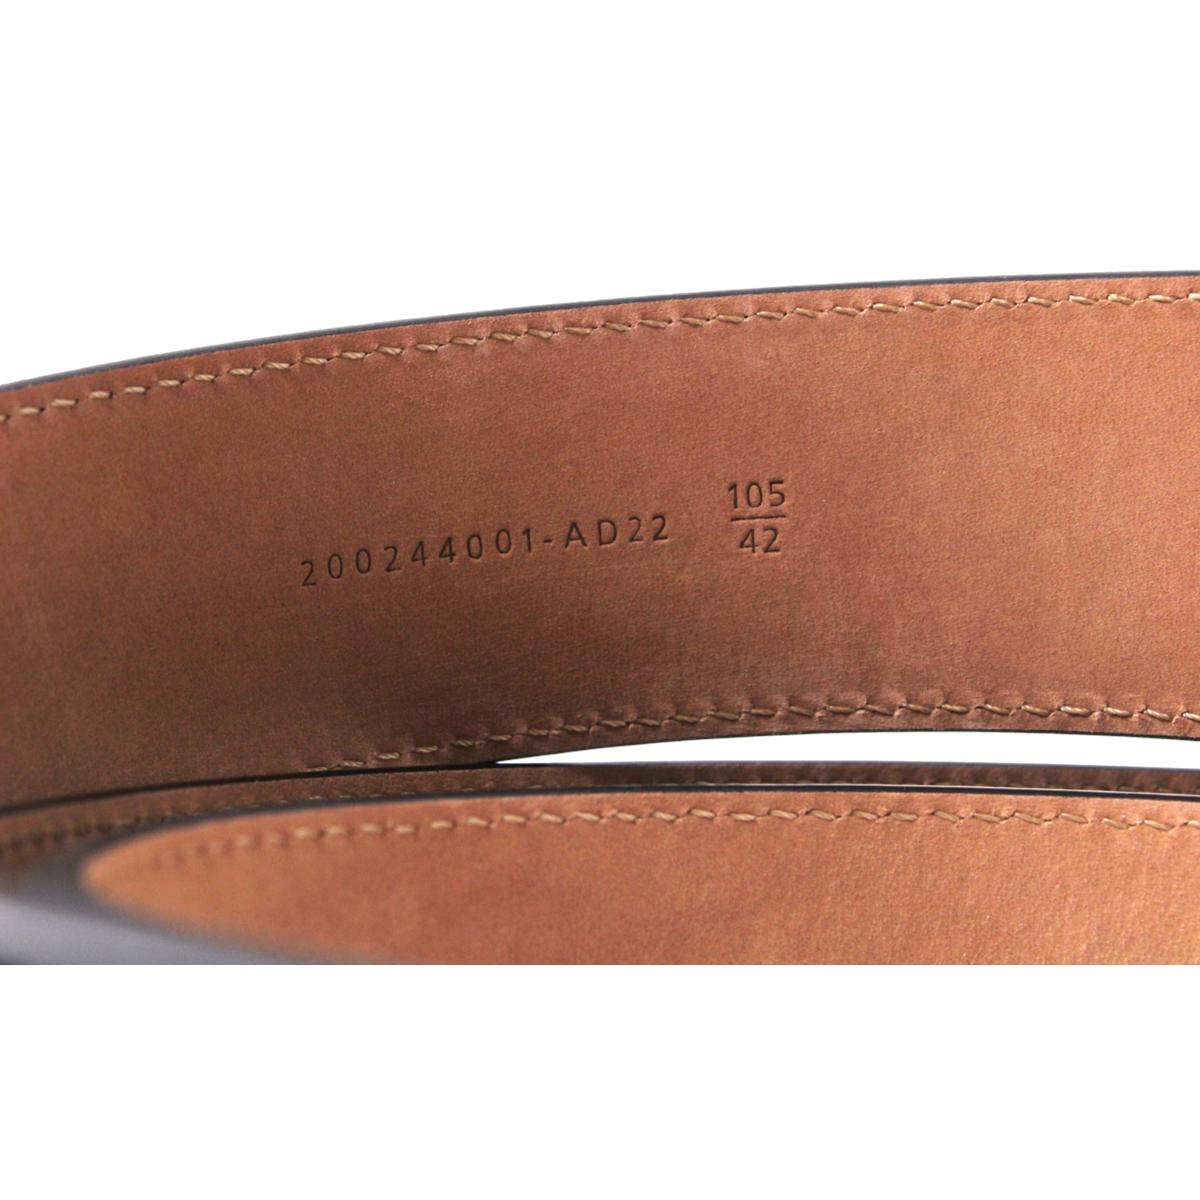 Fendi Reversible Black Beige Leather Perforated FF Buckle Belt Size 105 7C0437